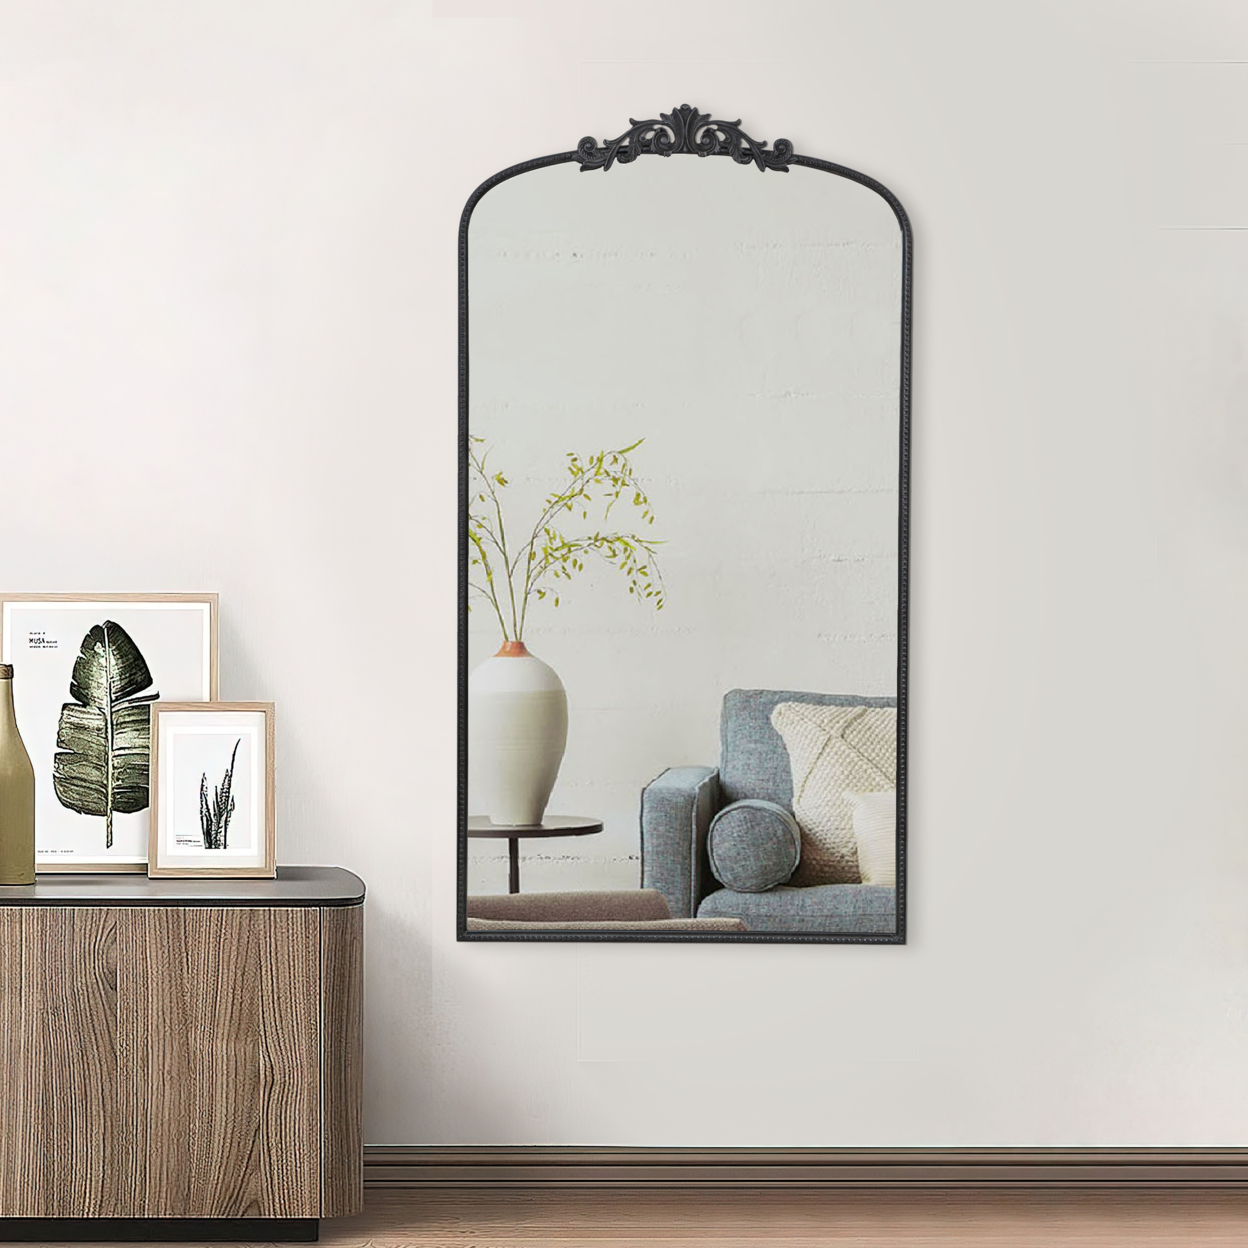 Kea 66 Inch Wall Mirror, Black Curved Metal Frame, Ornate Baroque Design- Saltoro Sherpi